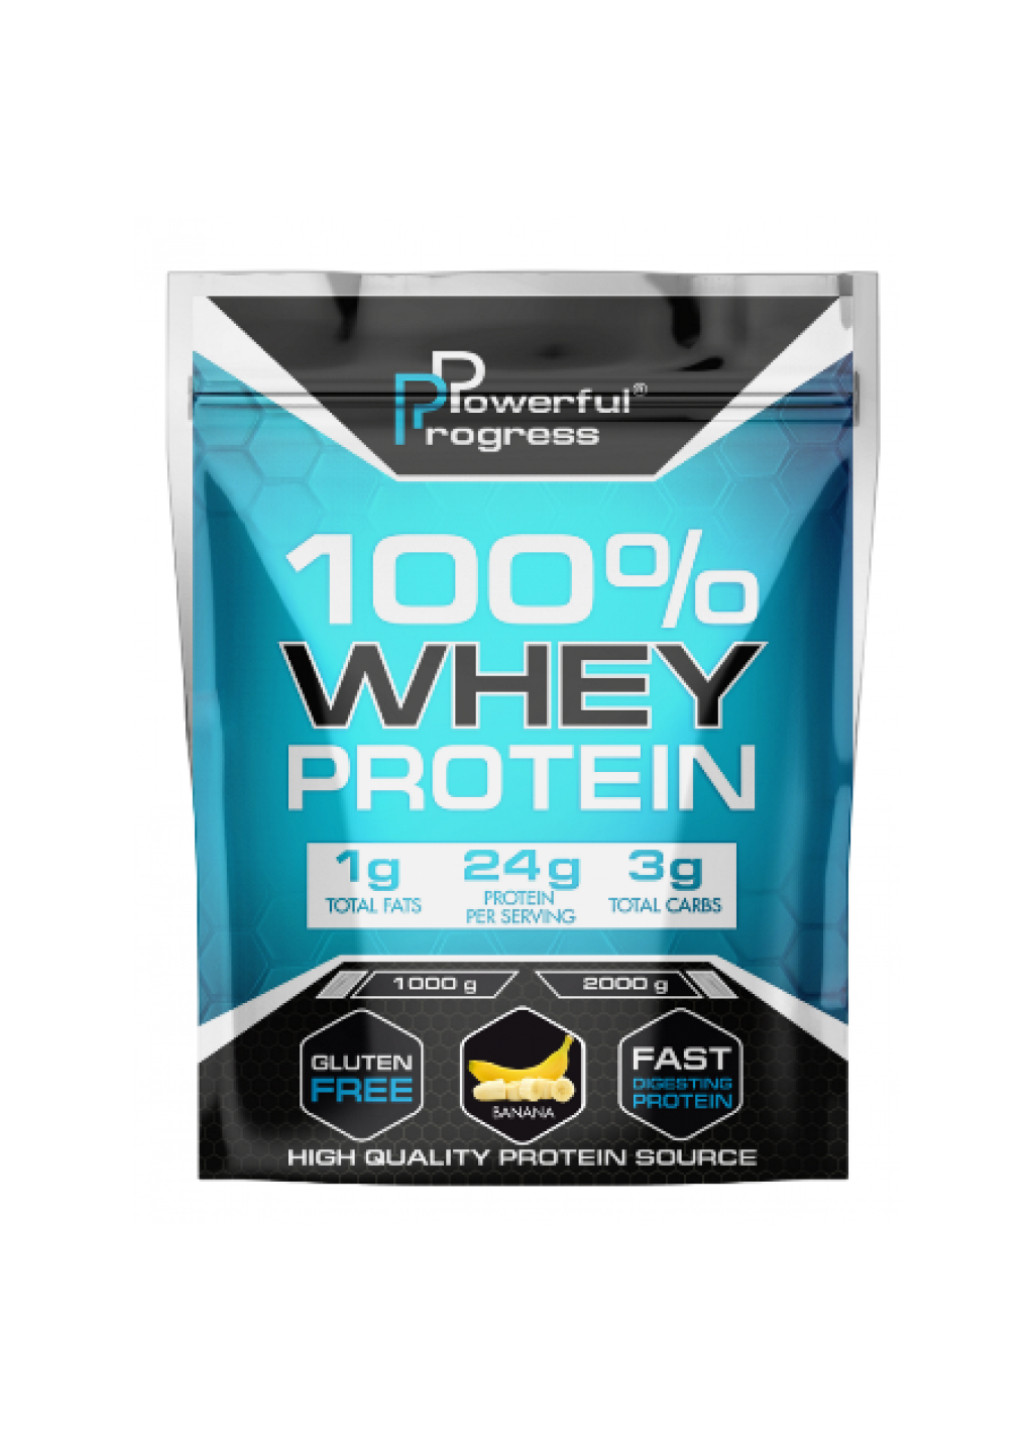 Протеин концентрат (24 грамма белка) 100% Whey Protein Instant - 2000g Pure Powerful Progress (254805184)